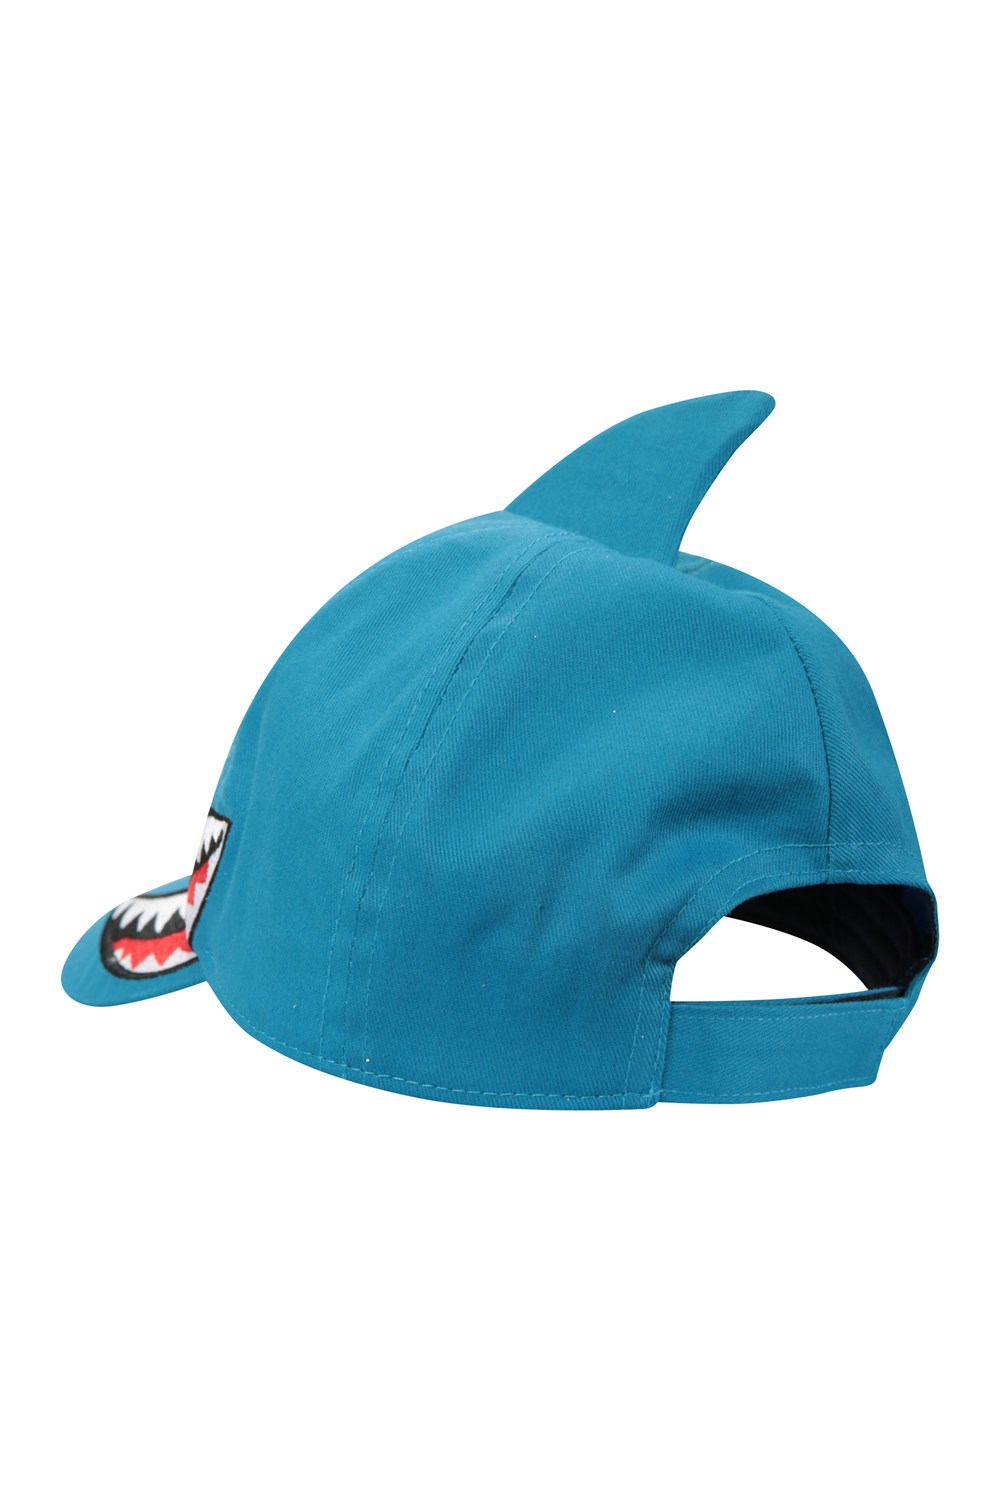 Mountain Warehouse Baseball Hat Blue w/Shark Design&Adjustable Strap ...